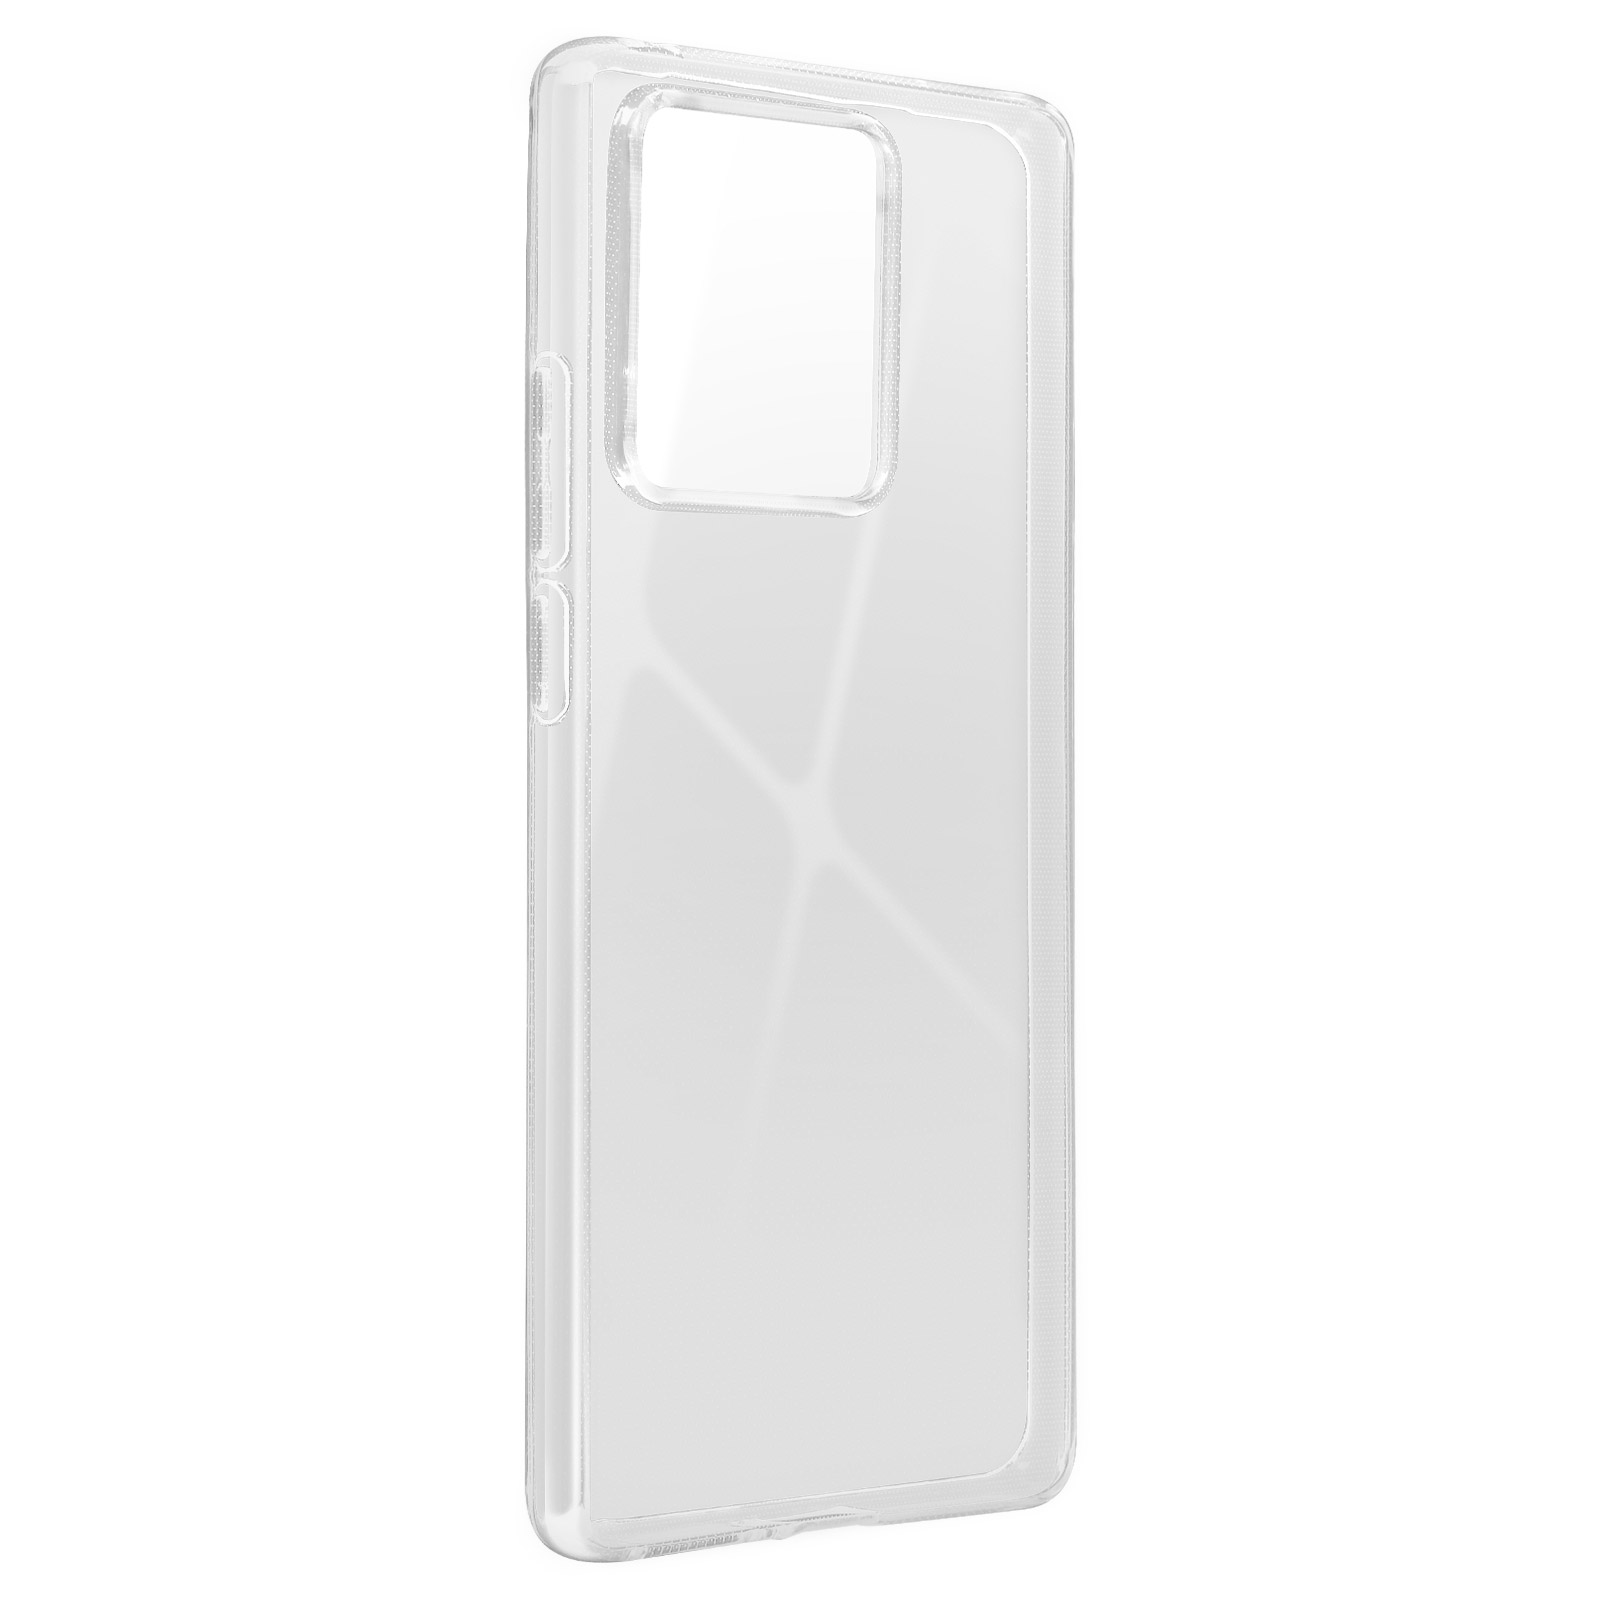 AVIZAR Pureflex Series Series, 40, Backcover, Motorola, Transparent Edge